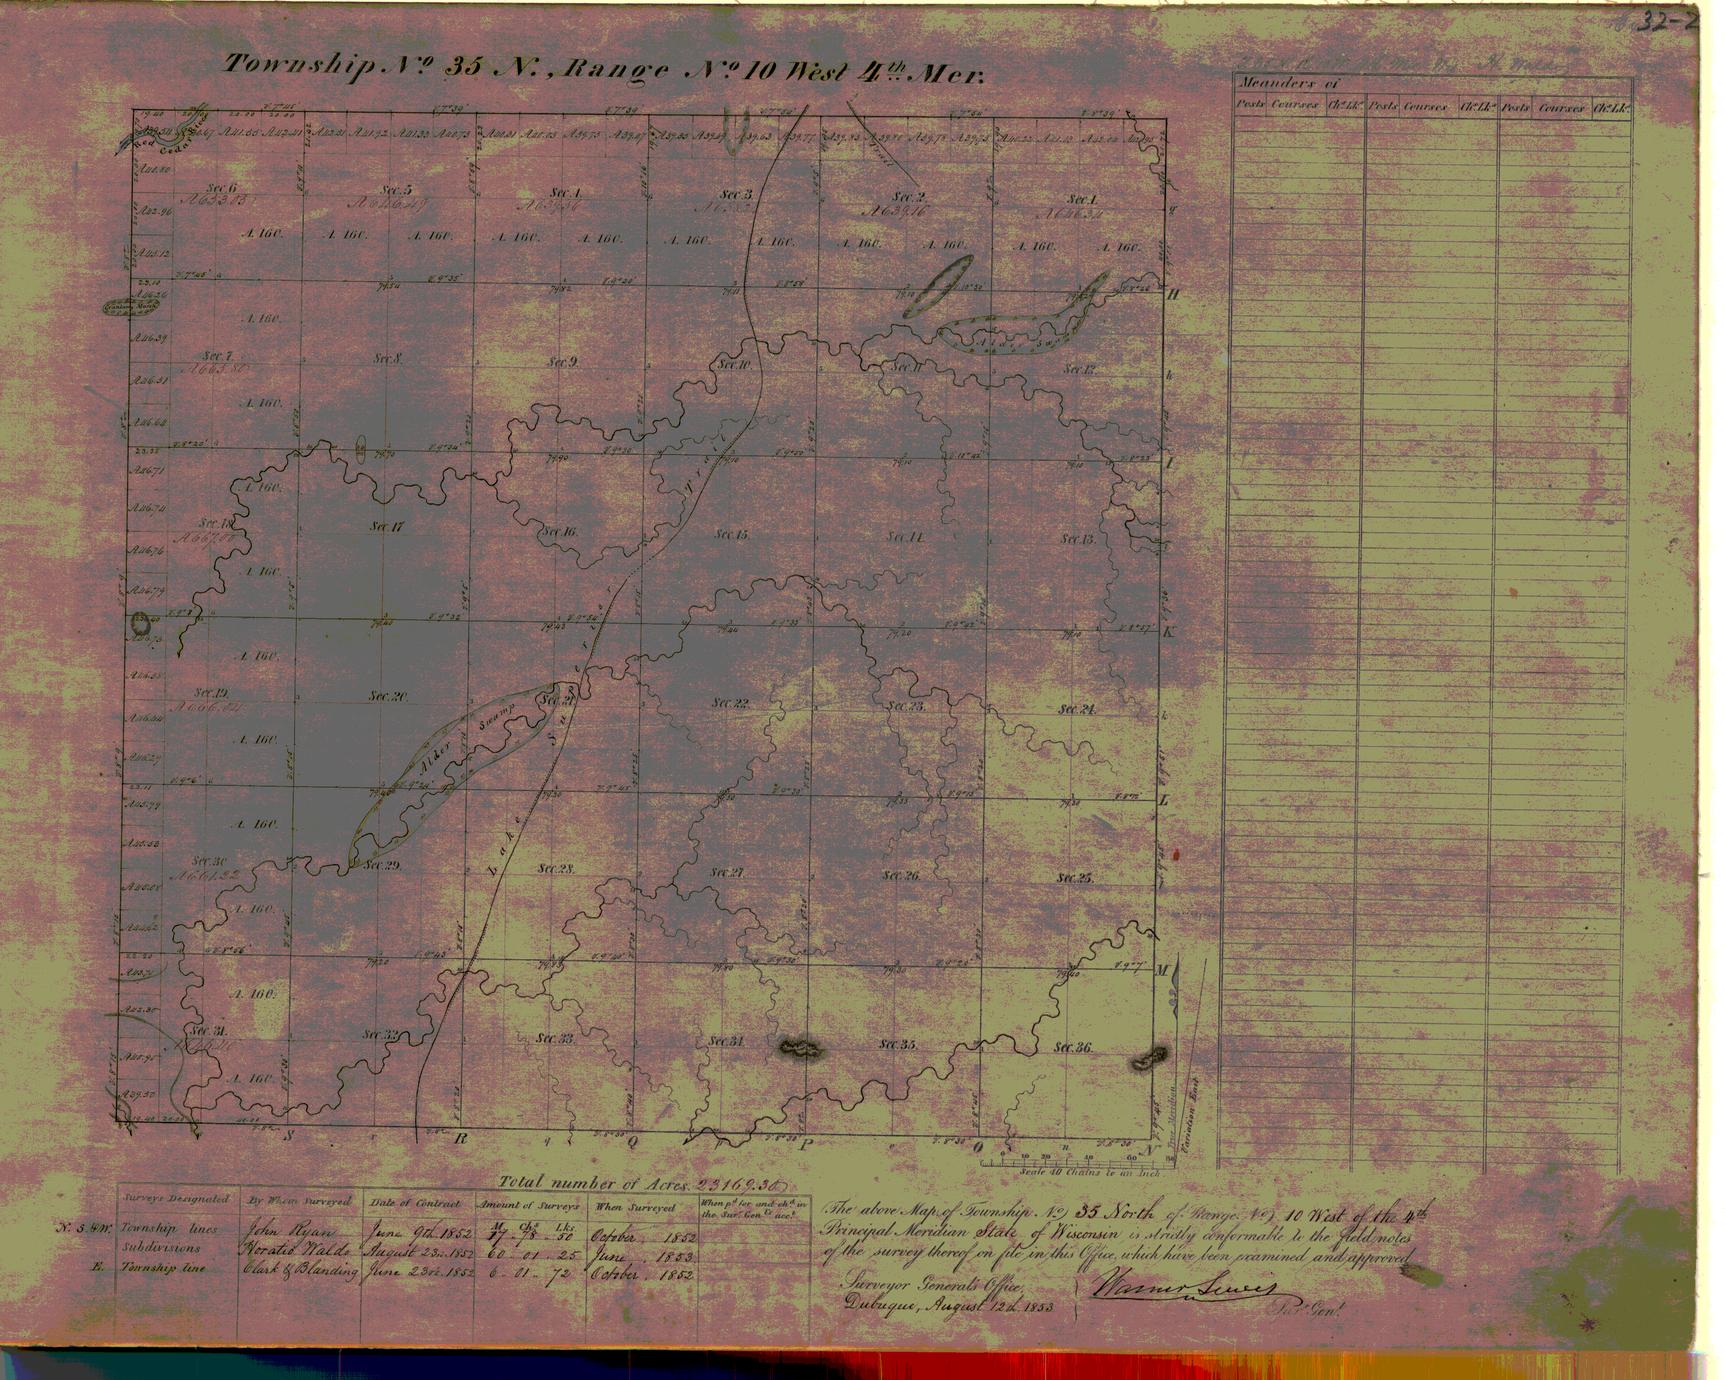 [Public Land Survey System map: Wisconsin Township 35 North, Range 10 West]